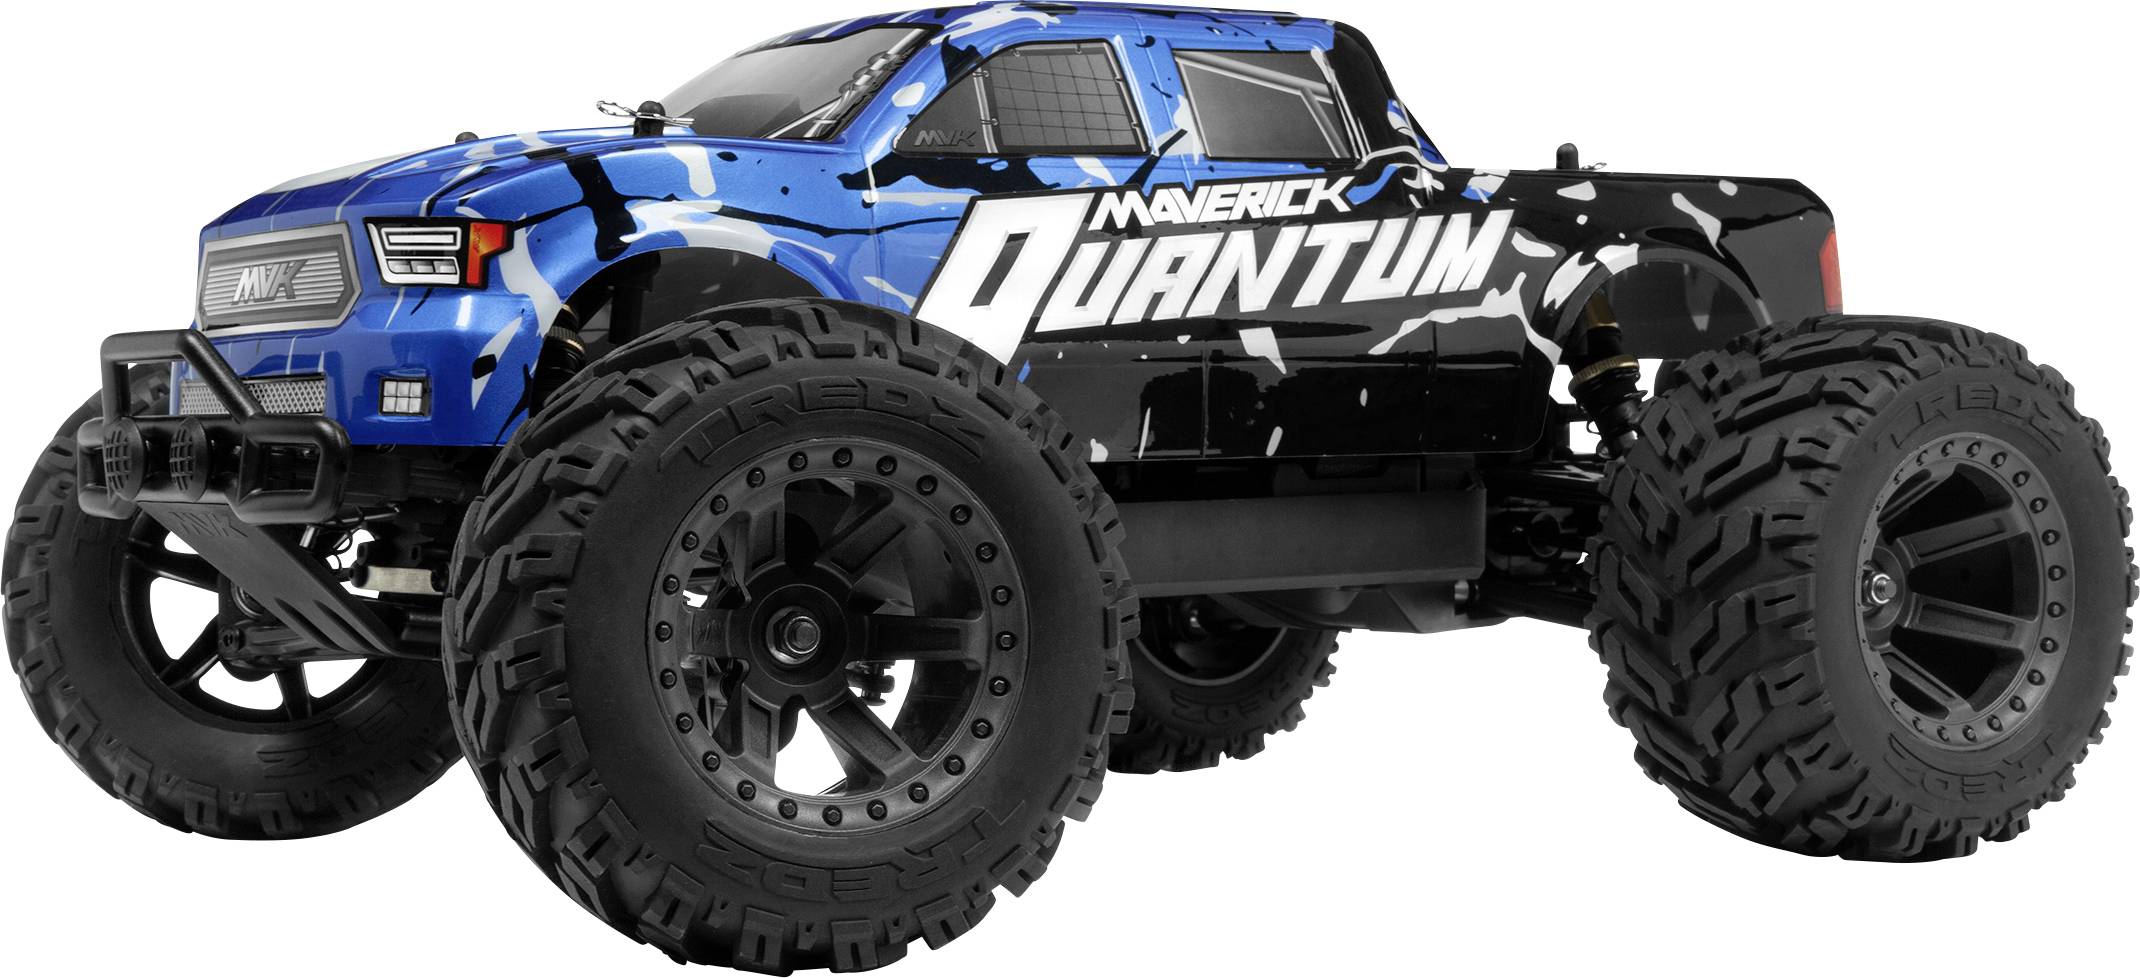 Maverick Quantum MT 1/10 4WD Monster Truck - Blue 1:10 Brushed RC-modelbil Elektronik Monstertruck Firehjulstræk (4WD) R